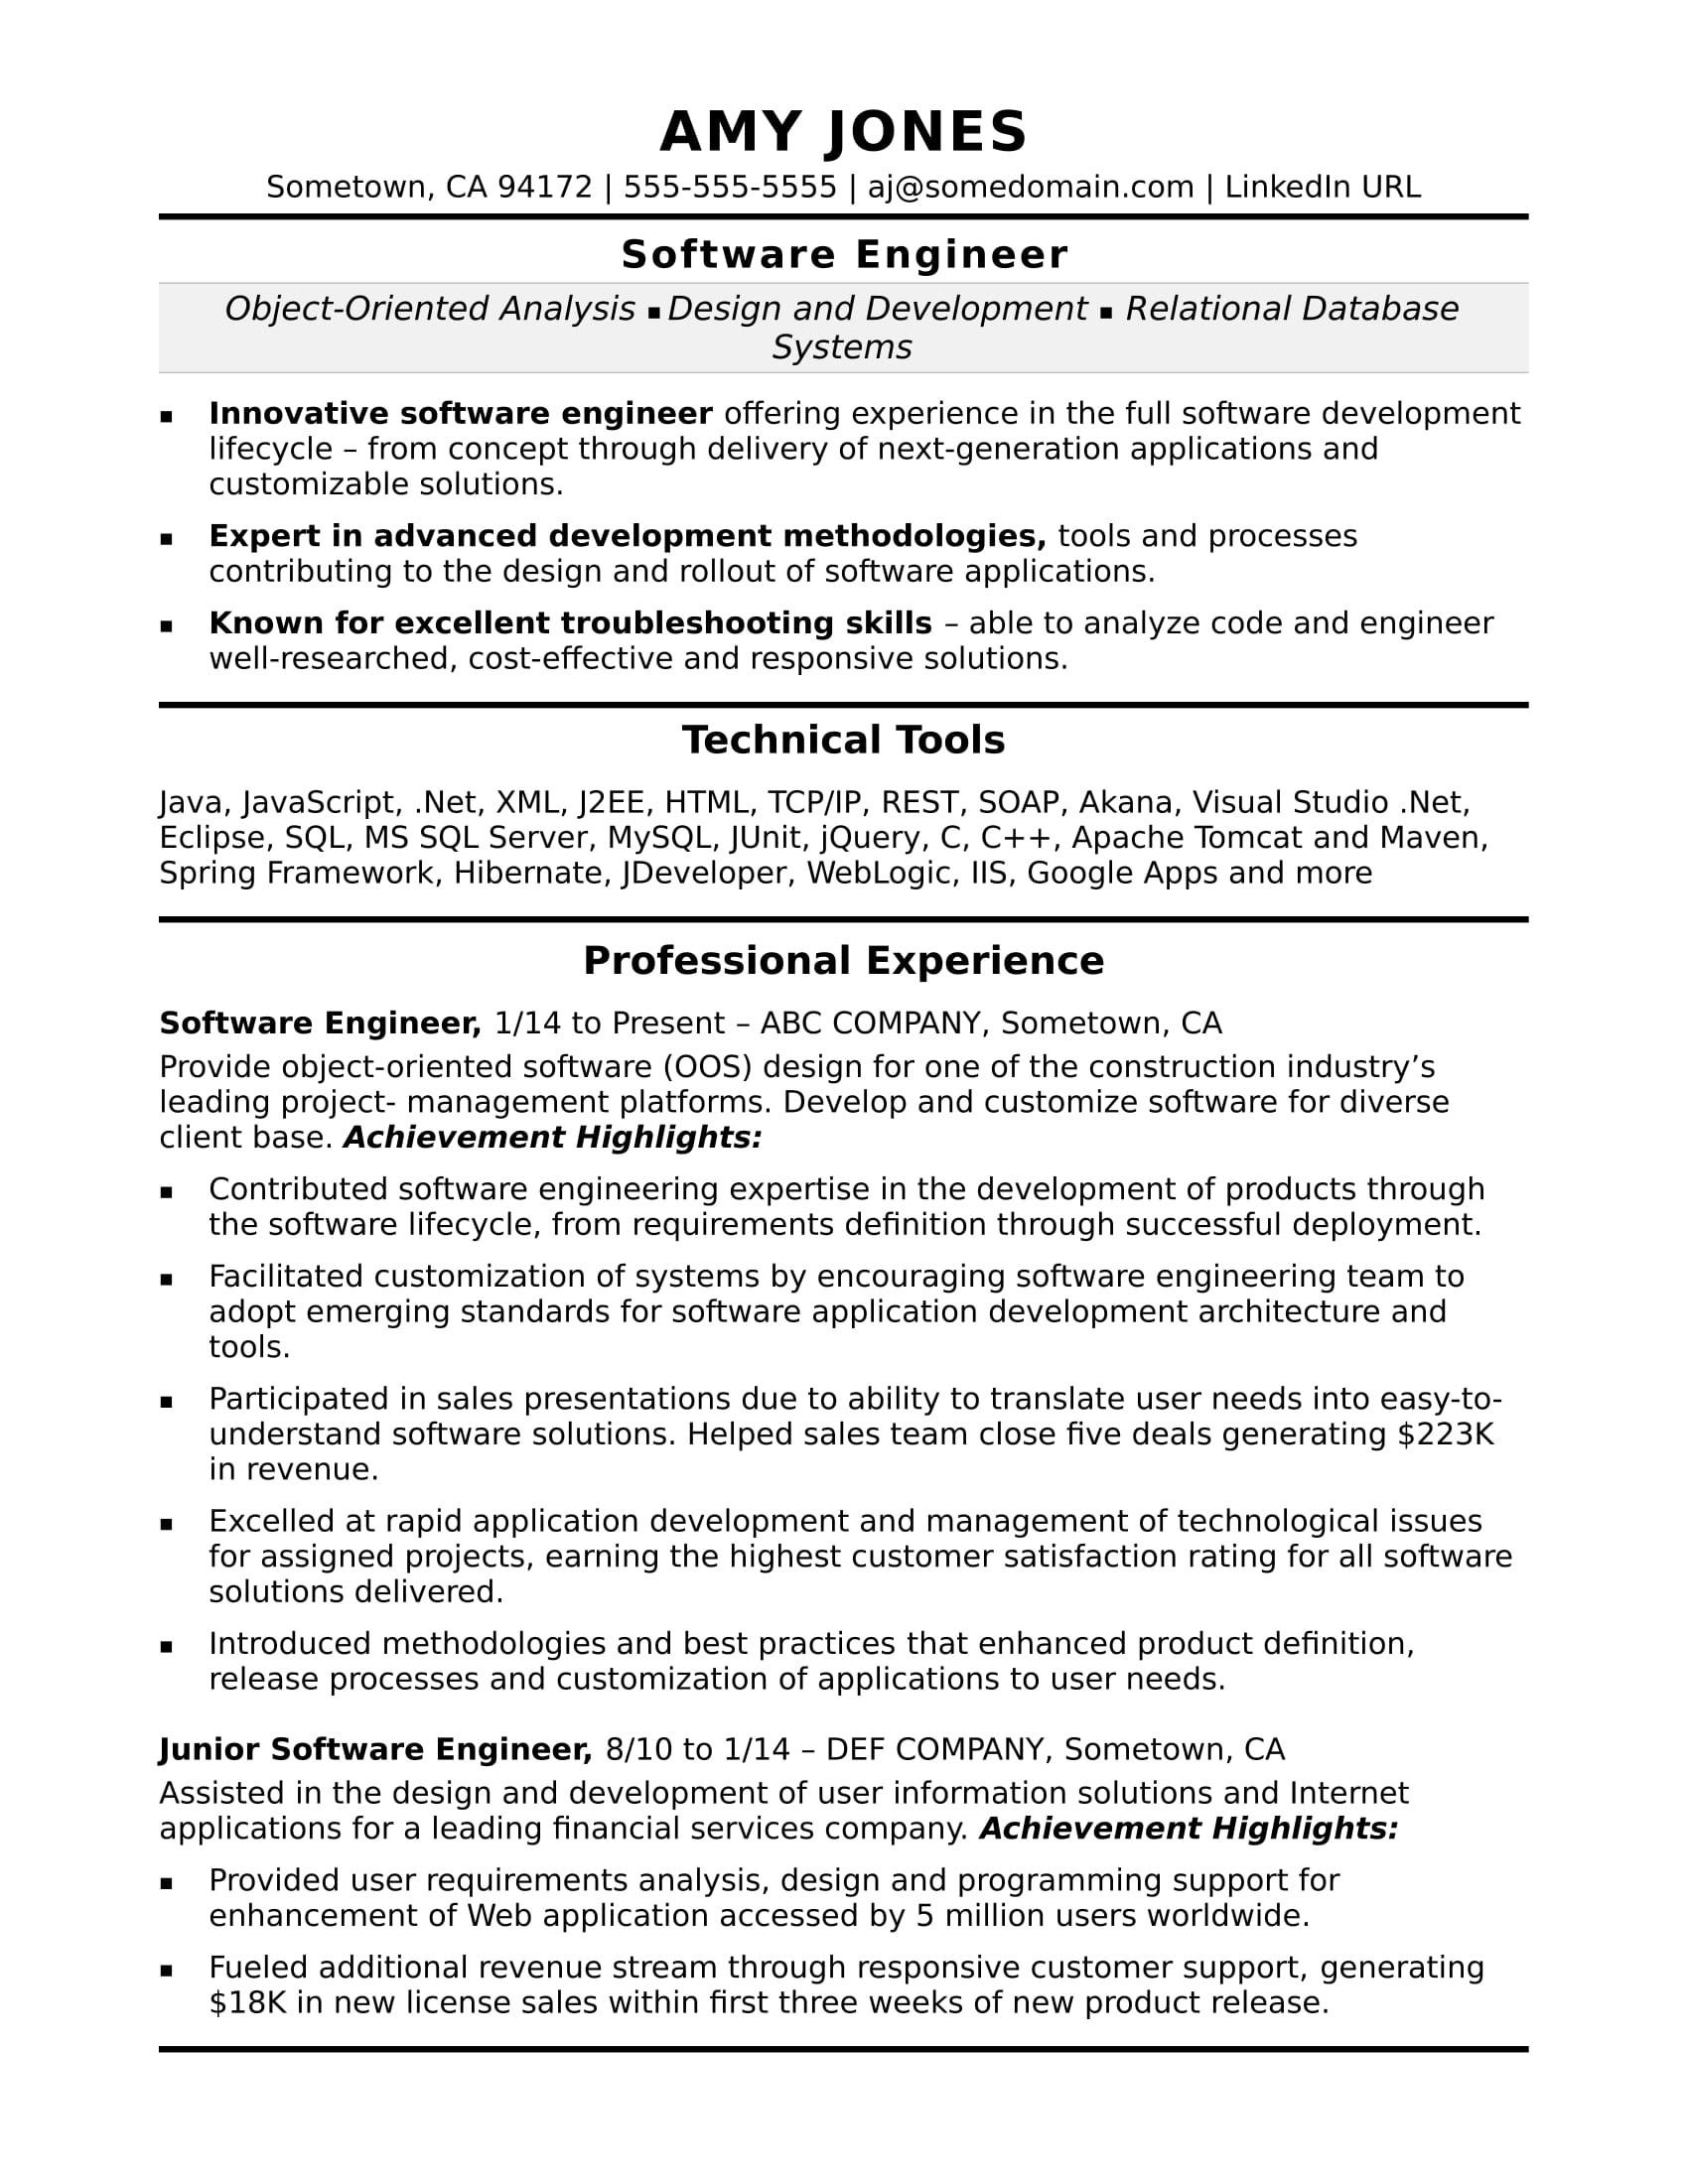 Software Project Description In Resume Sample software Engineer Resume Monster.com